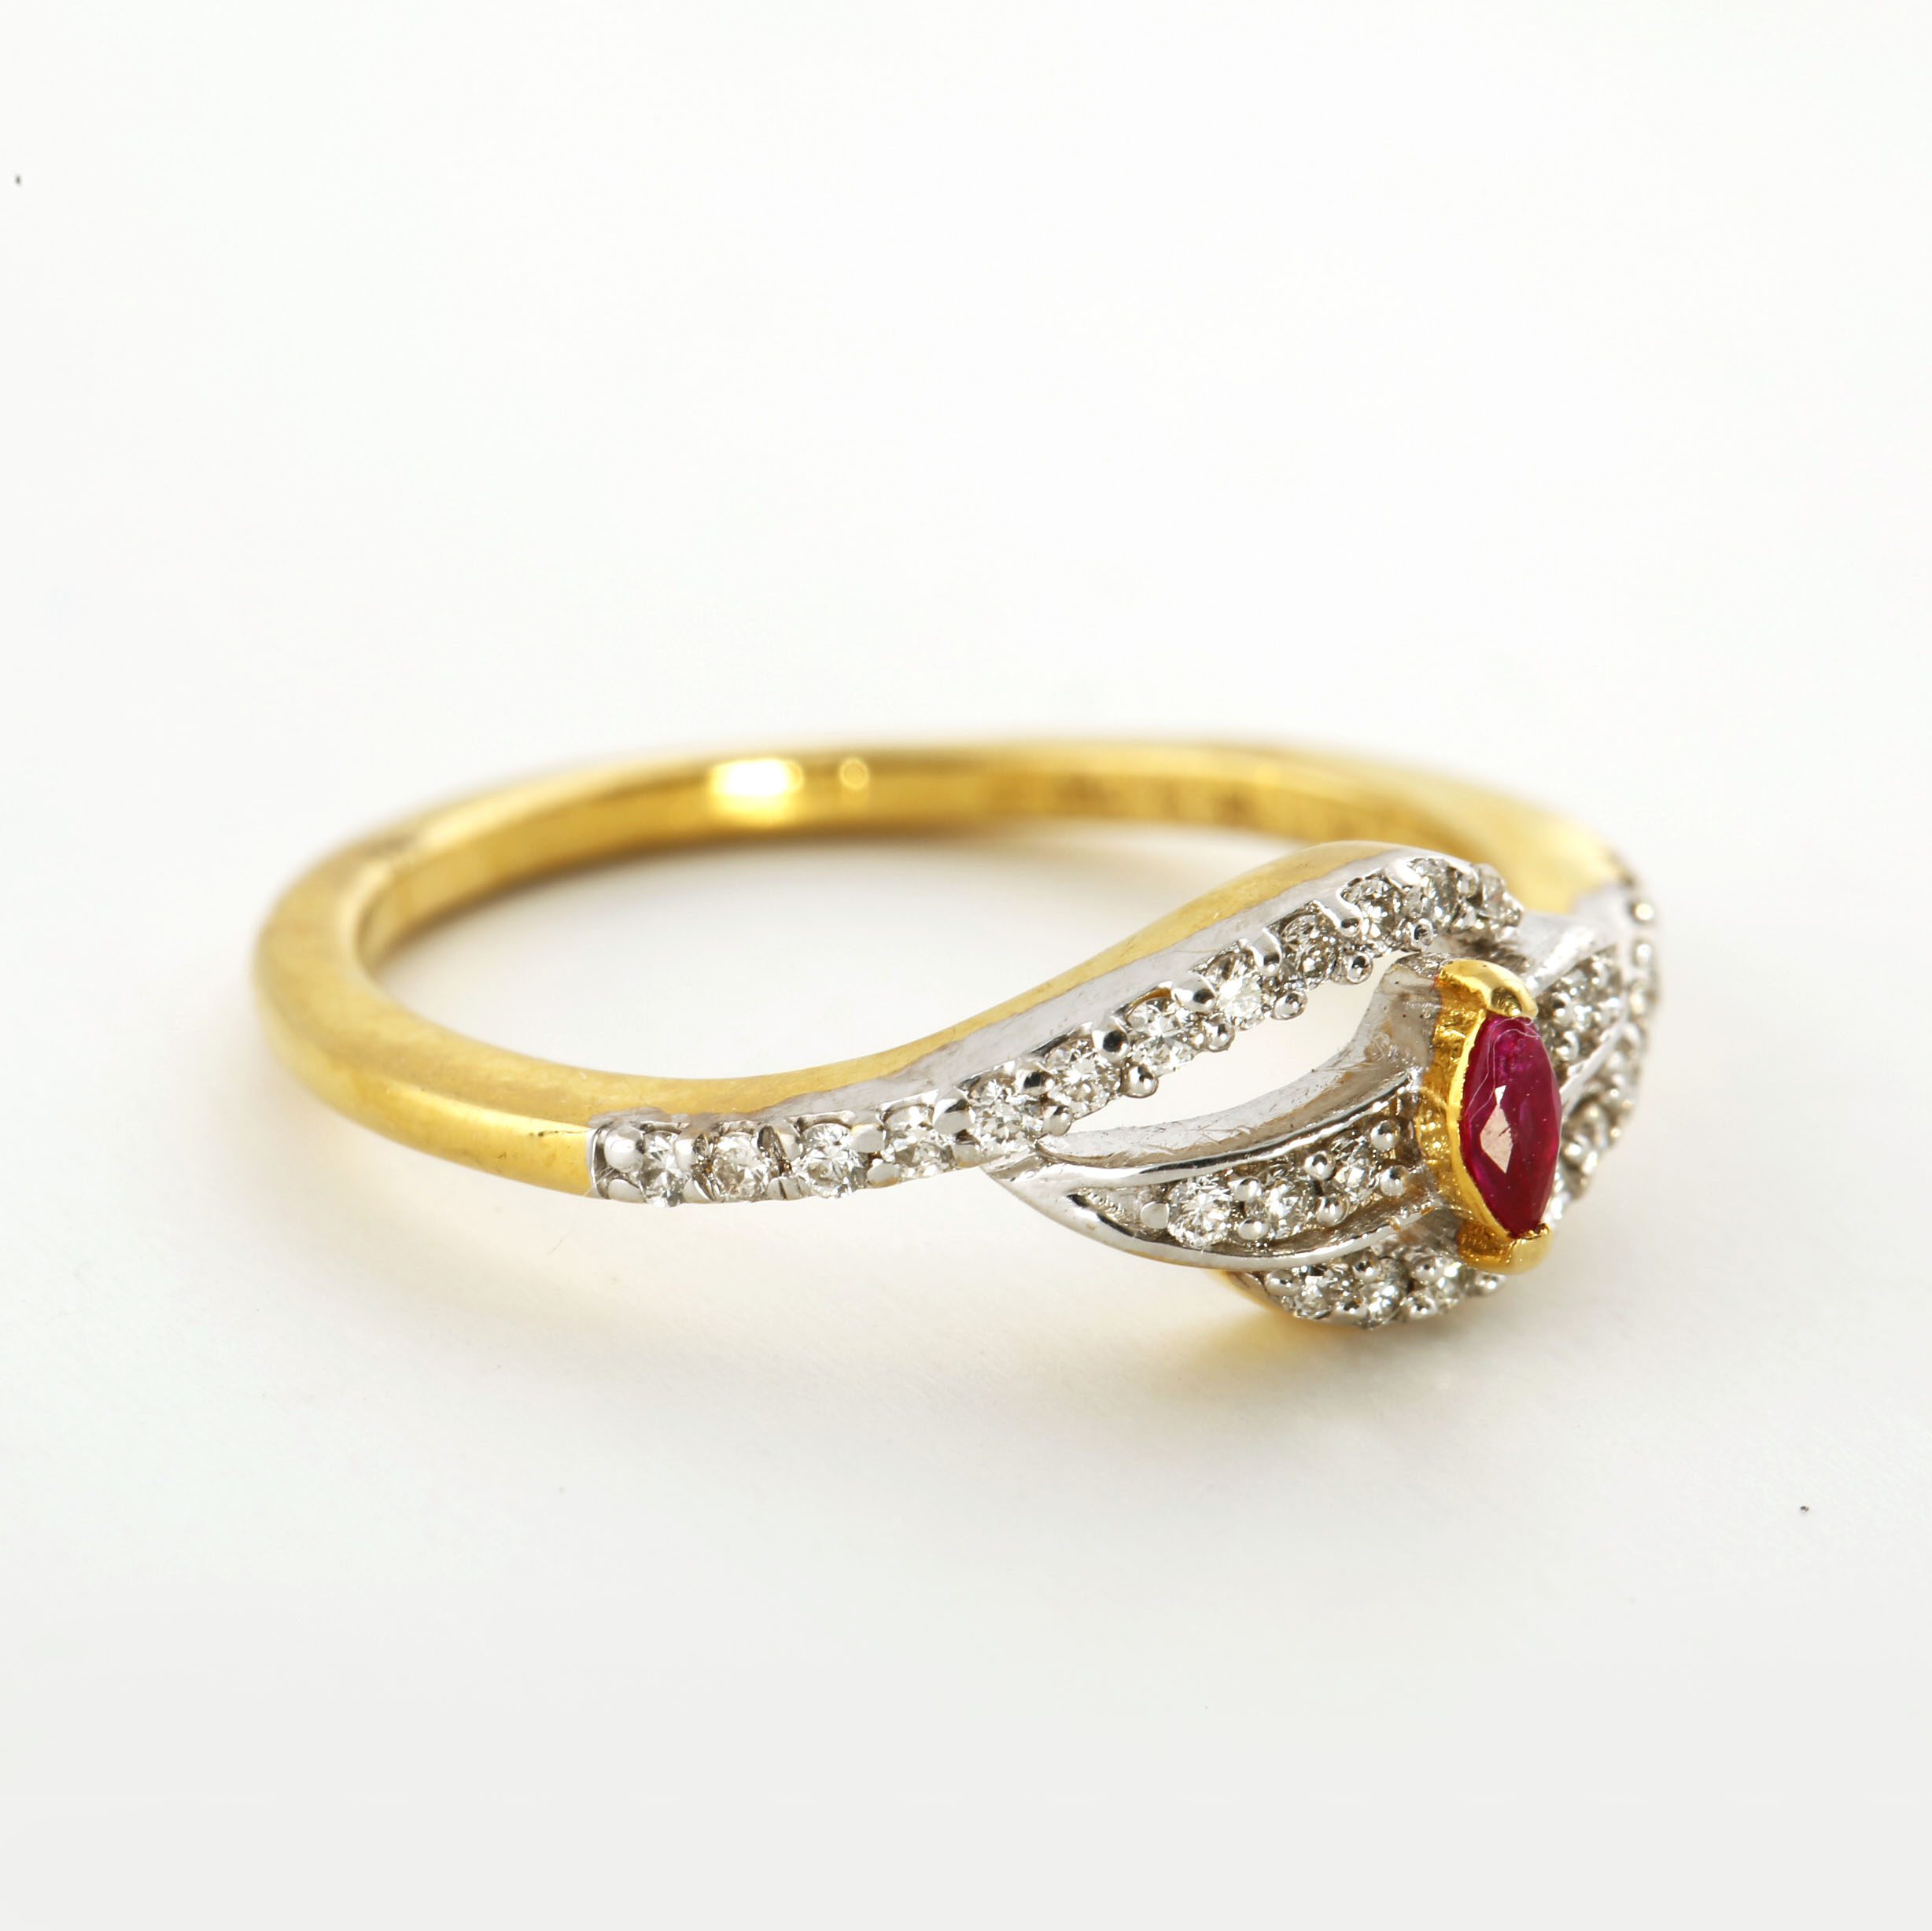 Huge Oval Ruby Gemstone Ring Sterling Silver Gold Statement Engagement Ring  | eBay